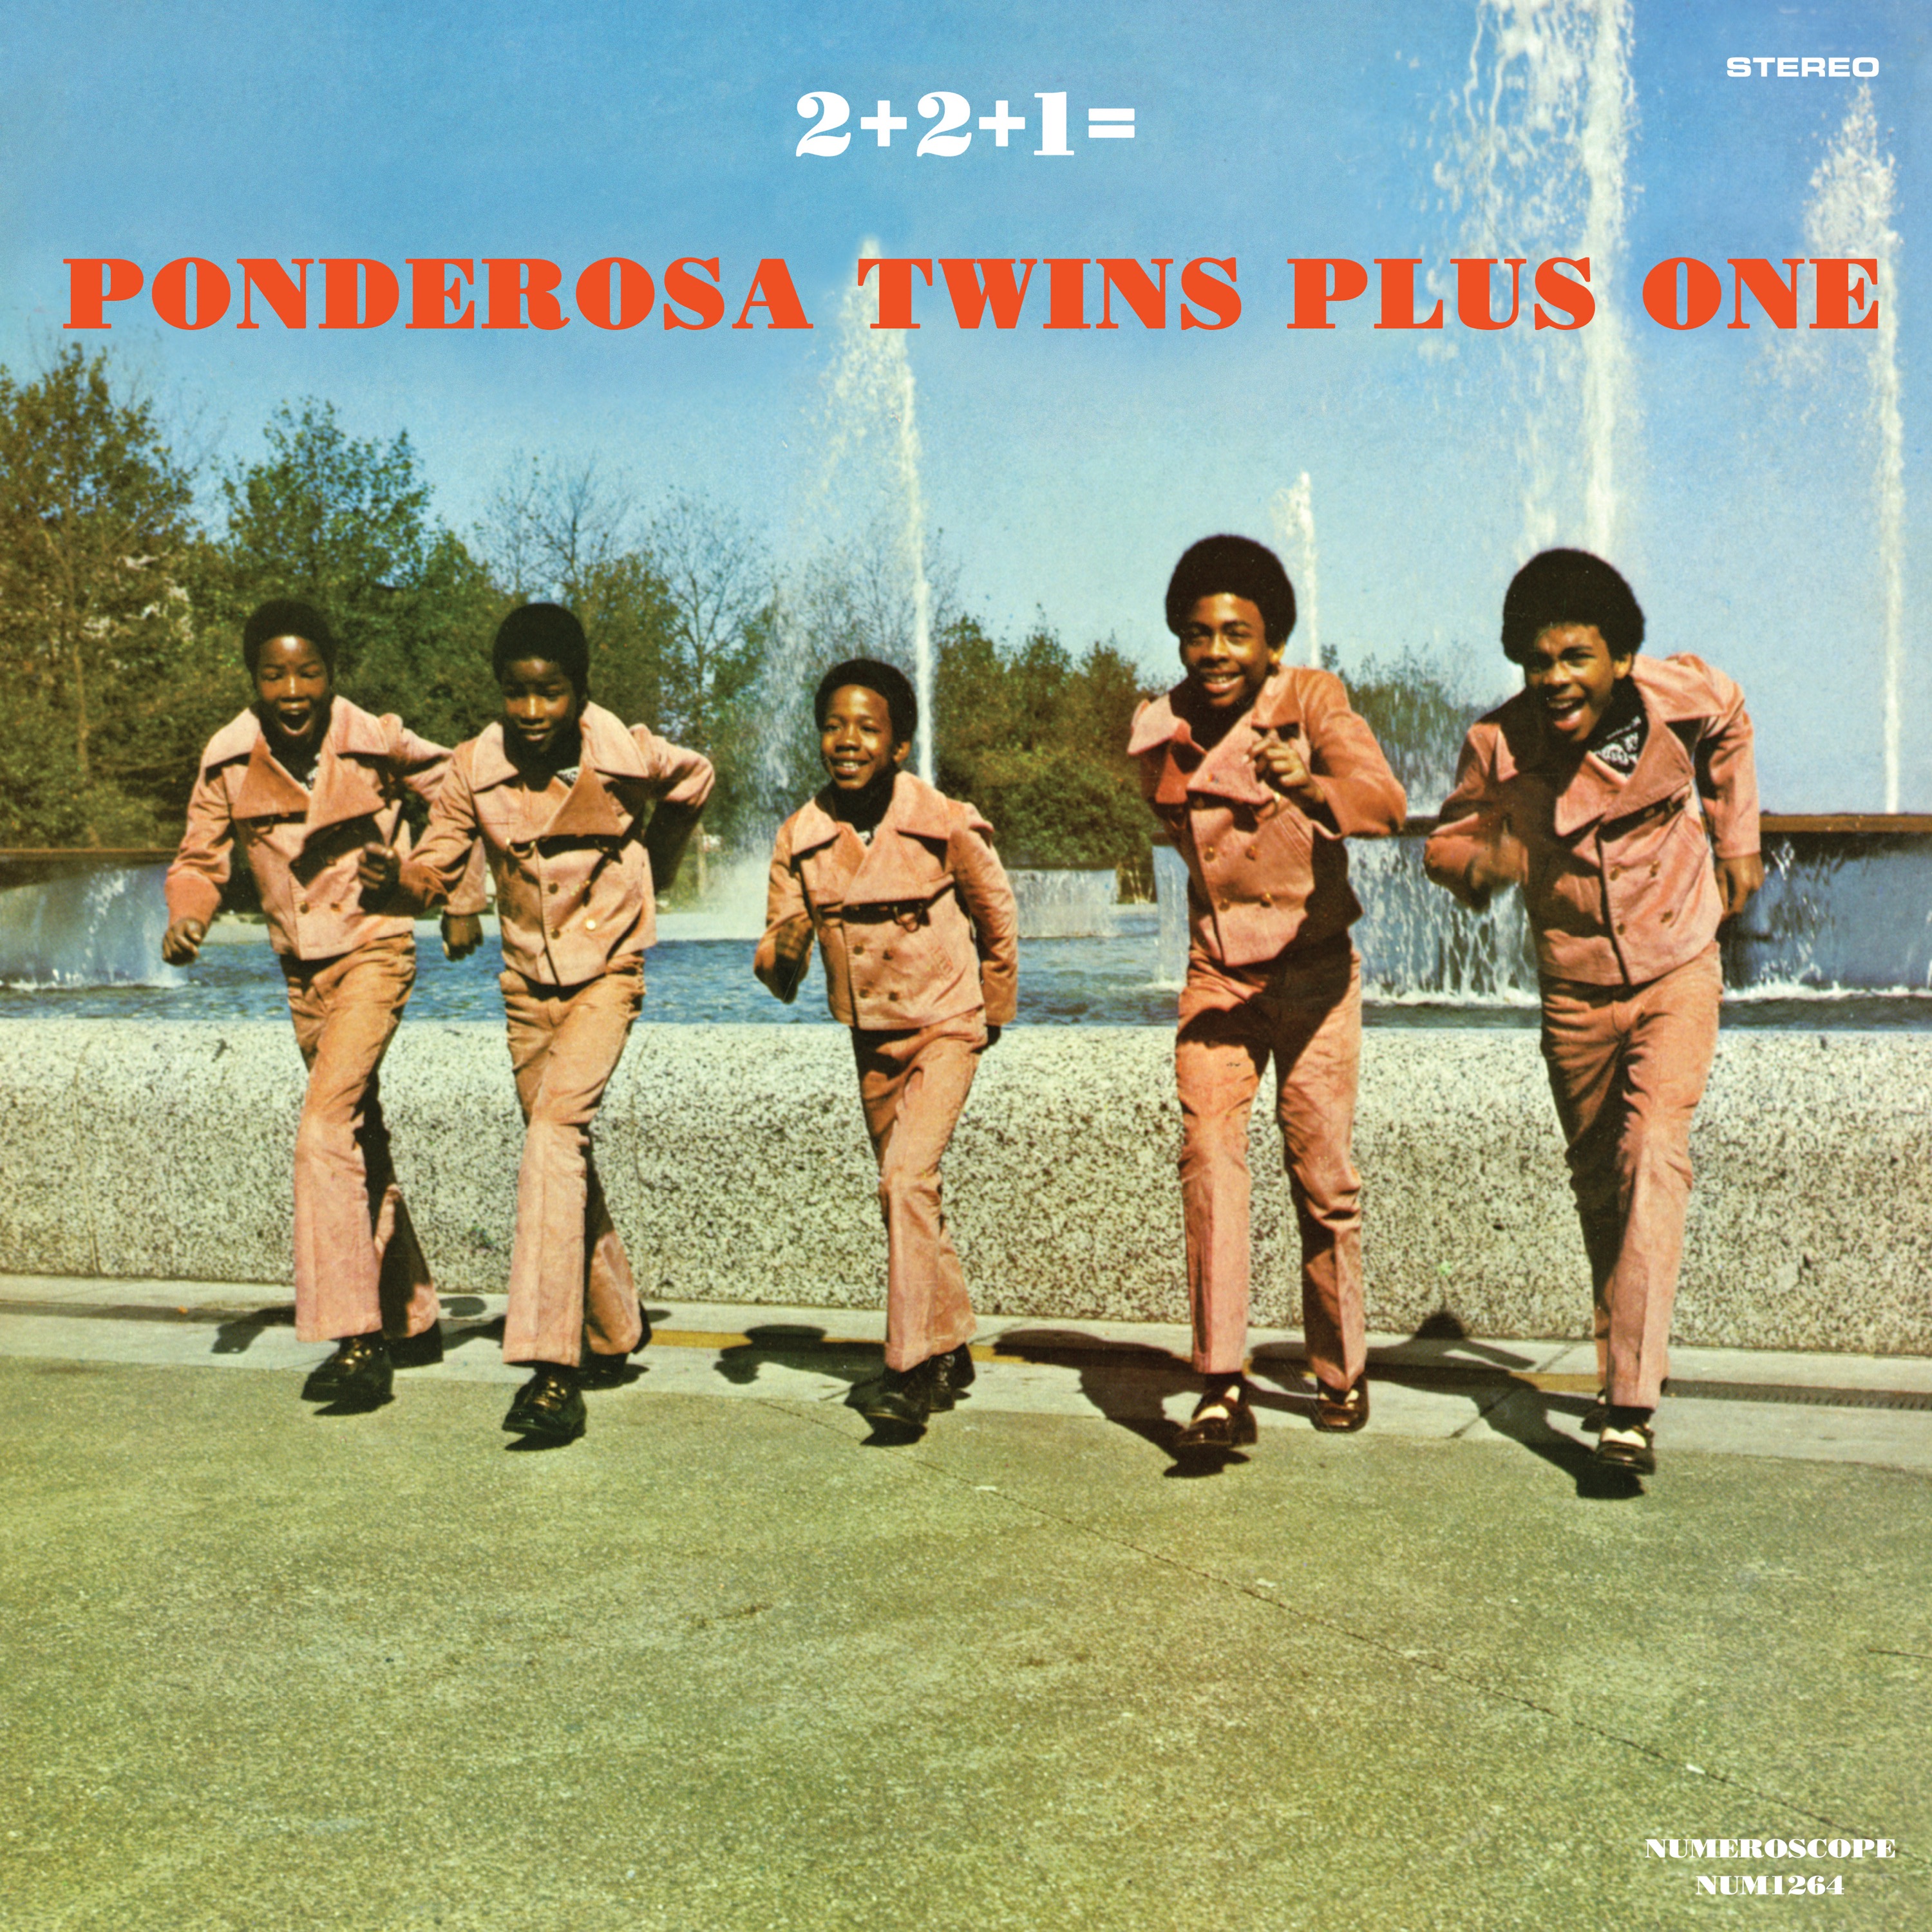 The Ponderosa Twins Plus One - 2+2+1 (Ponderosa Plum Vinyl)